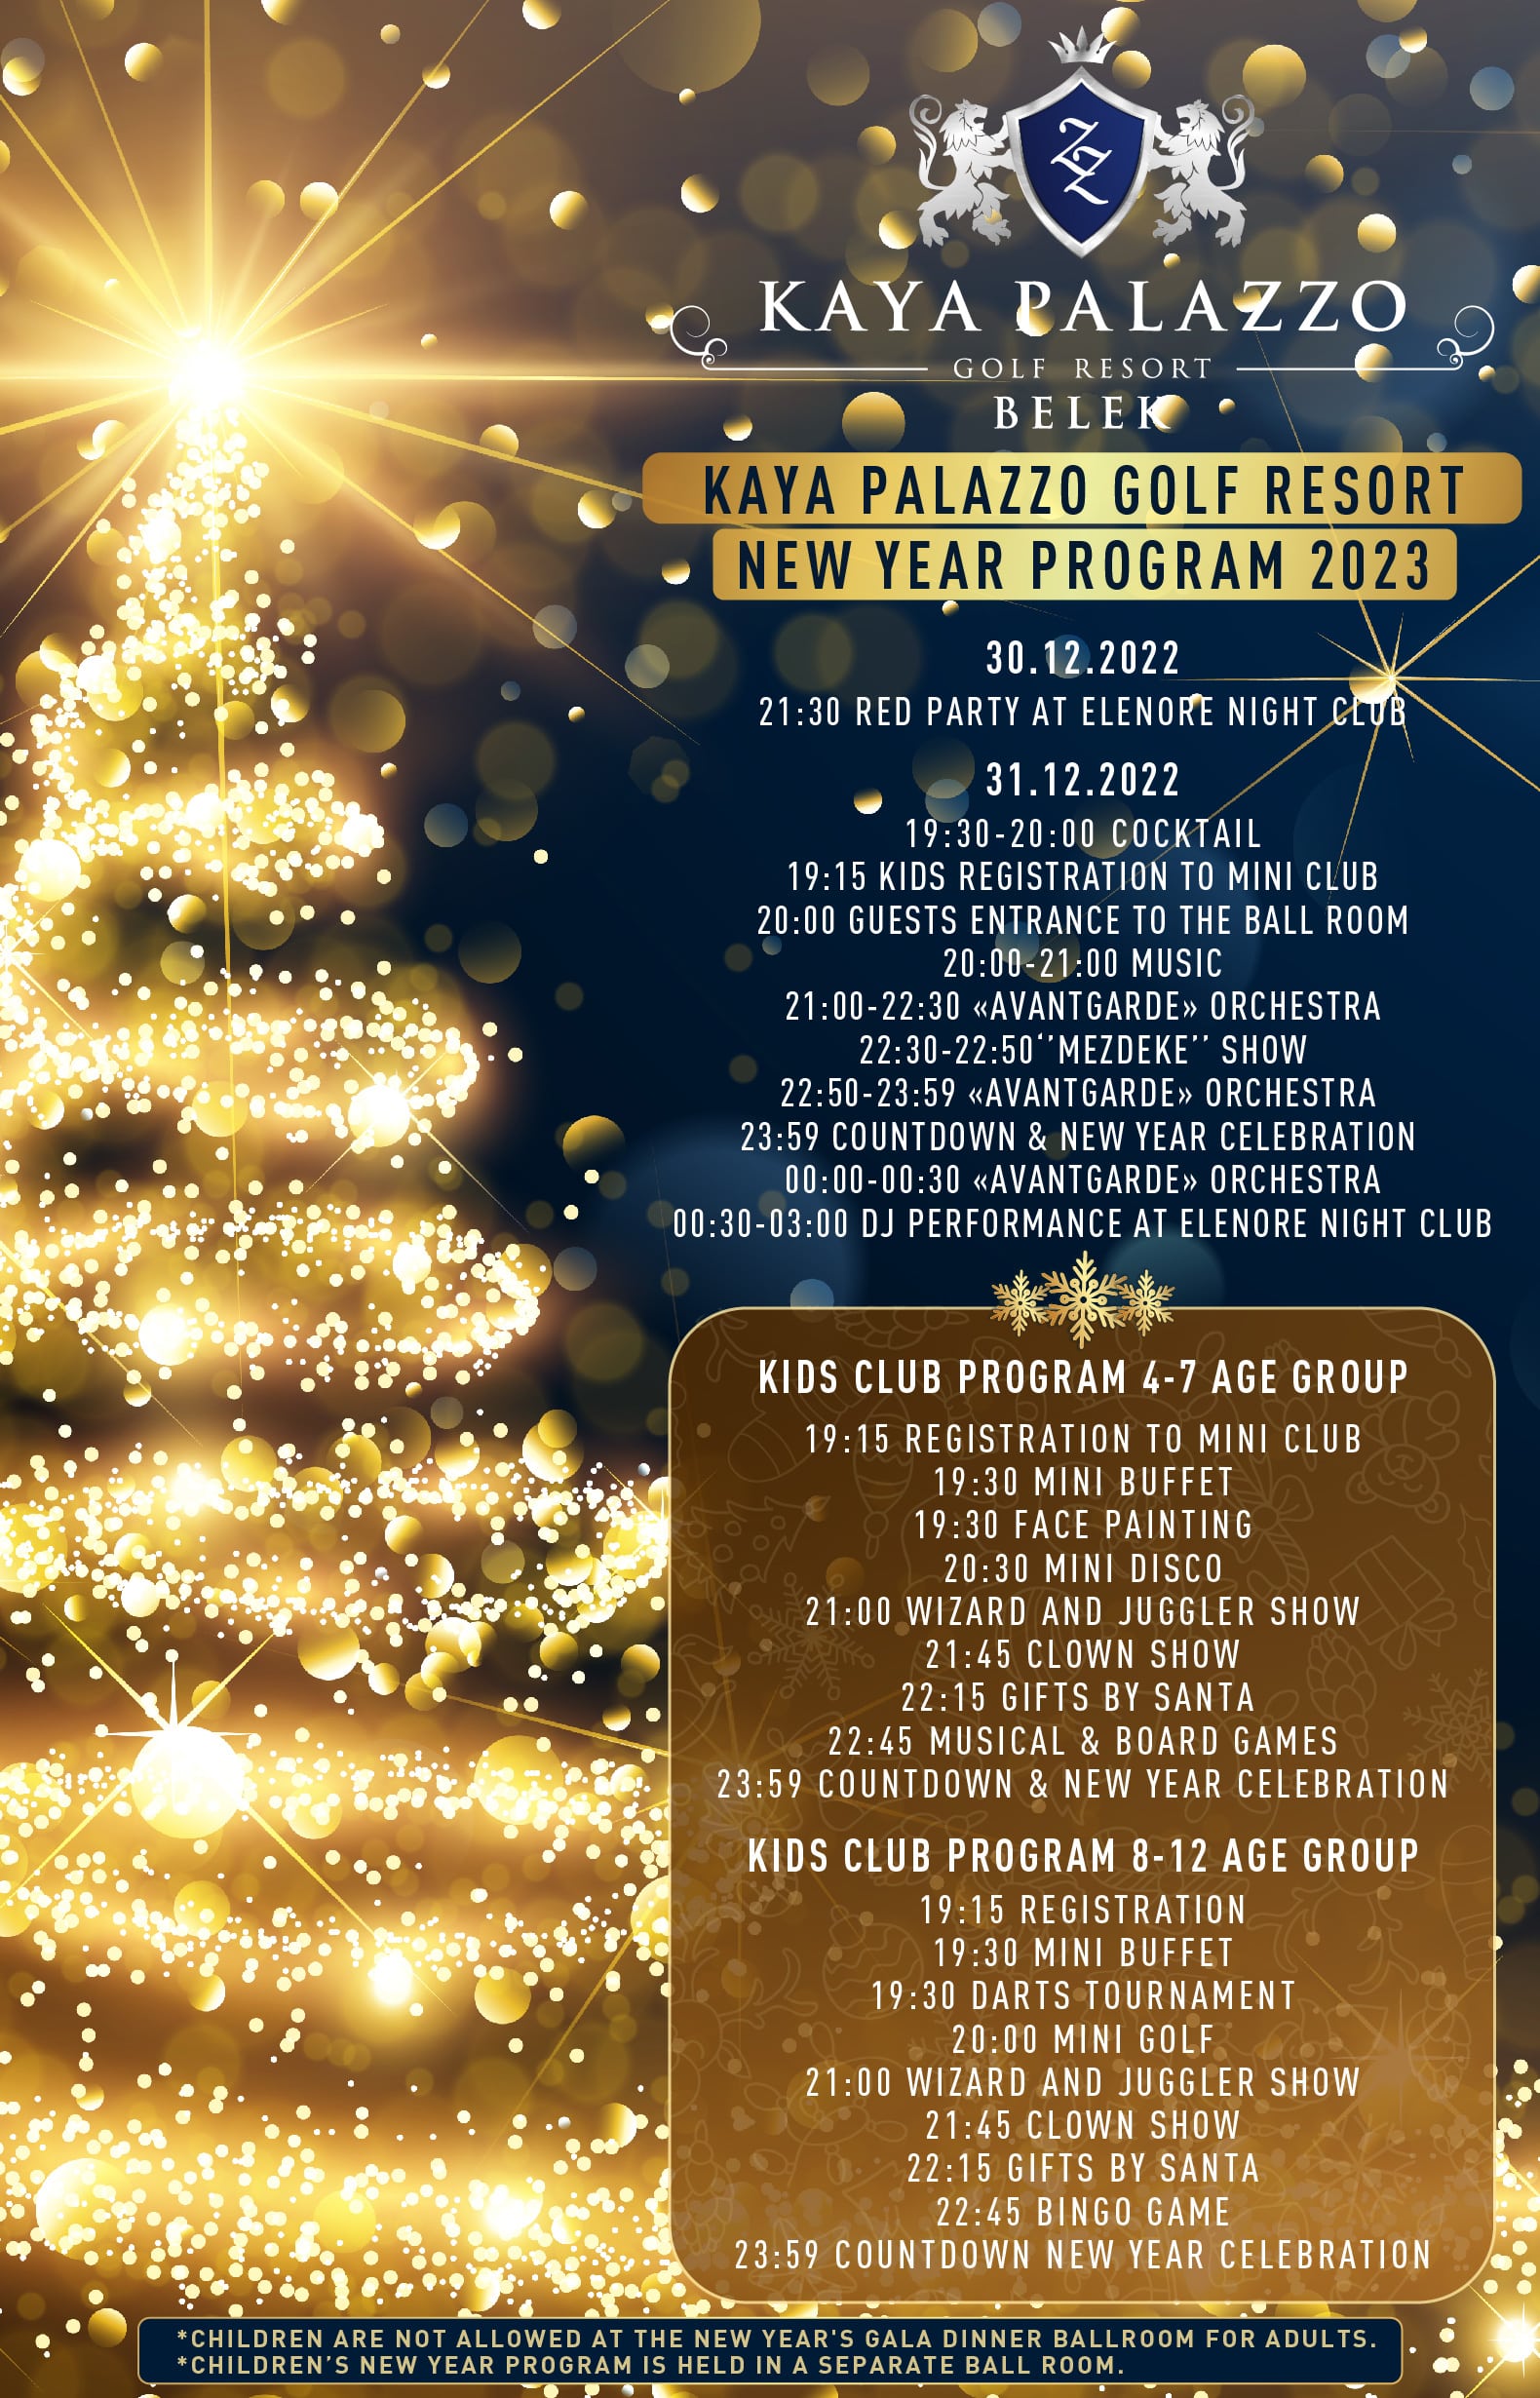 Kaya Palazzo Golf Resort New Year 2023 Program-min.jpg